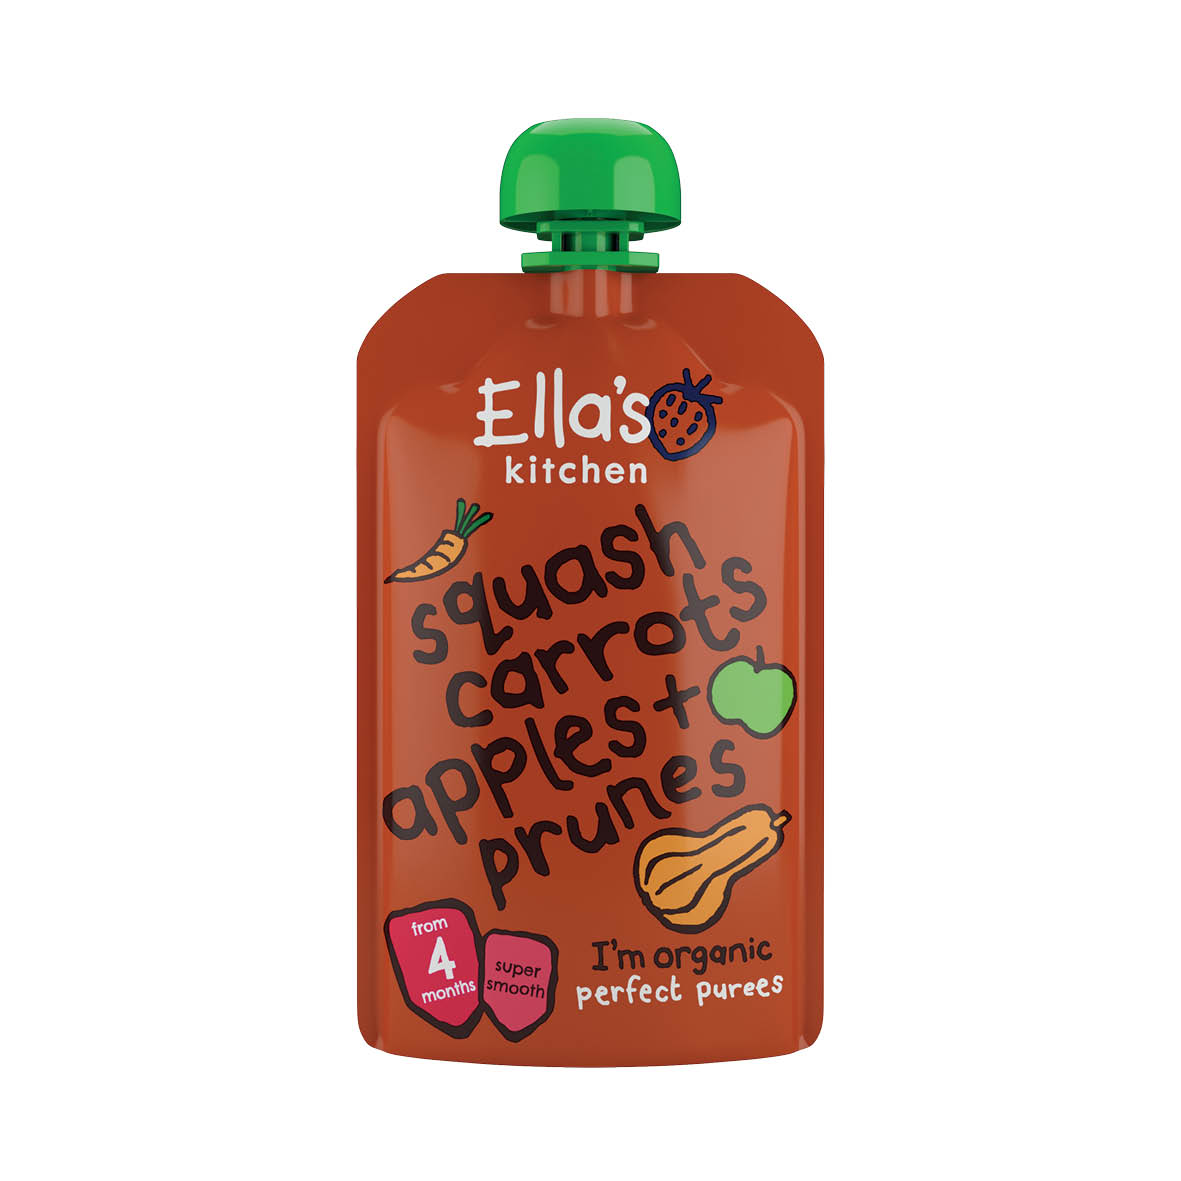 Ella's Kitchen squash, carrots, apples and prunes